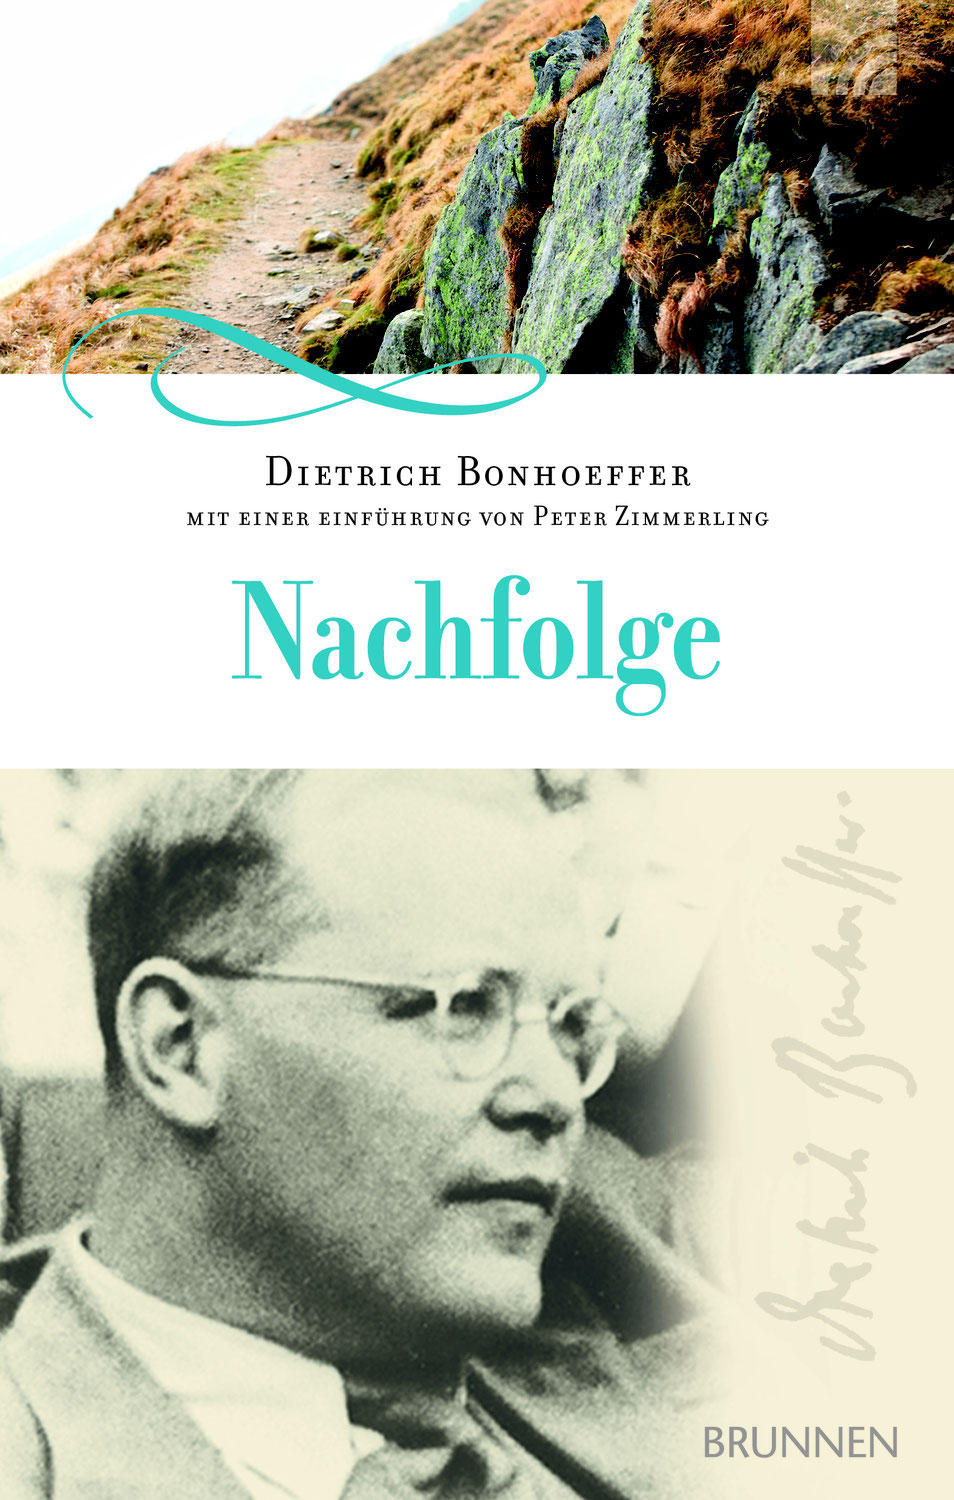 Dietrich Bonhoeffer: Nachfolge